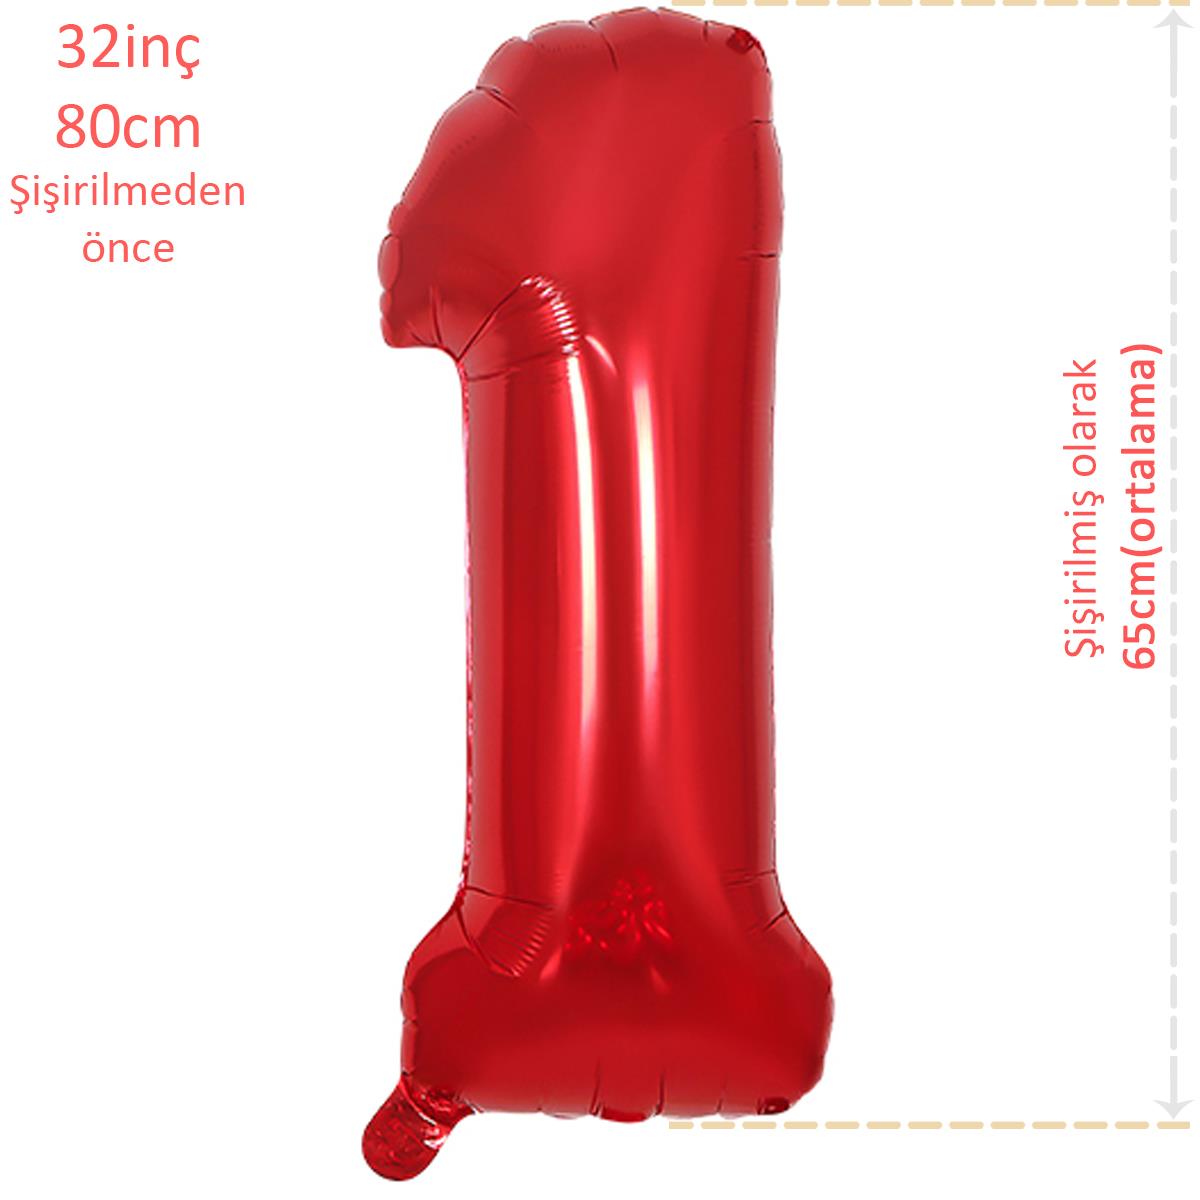 Rakam Folyo Balon Kırmızı 1 Rakamı 32inç 80cm